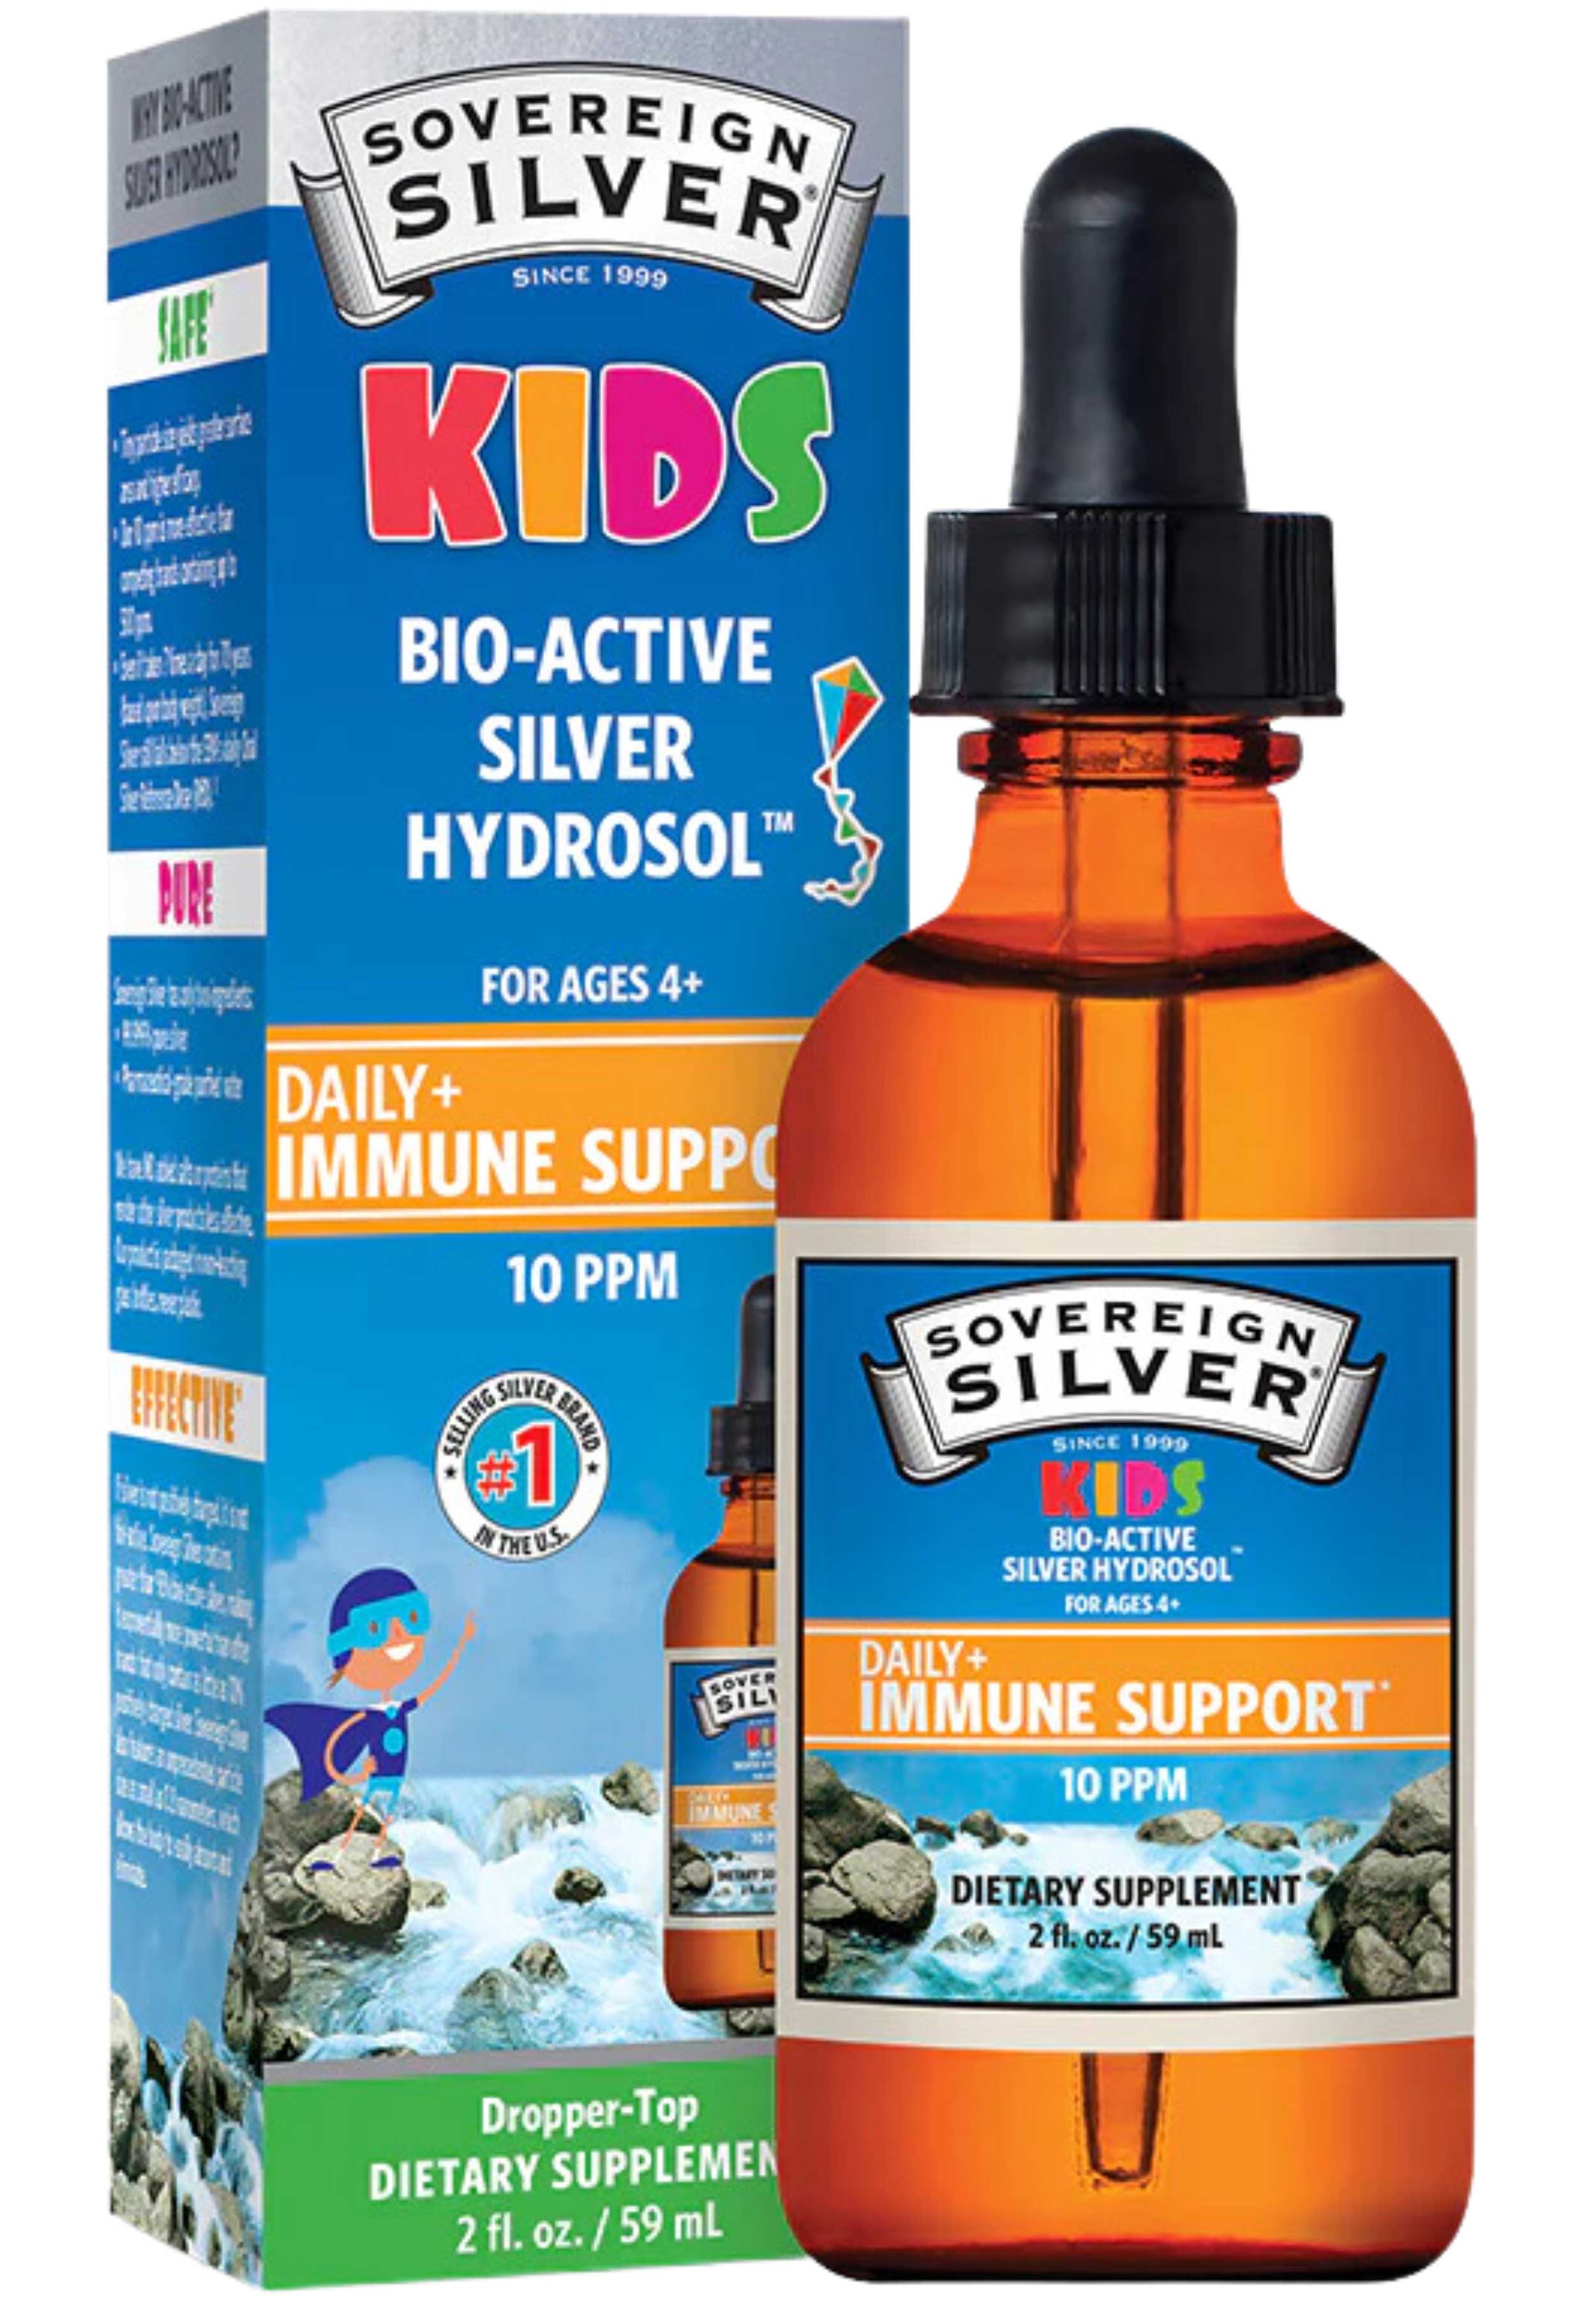 Sovereign Silver KIDS Bio-Active Silver Hydrosol - Dropper-Top